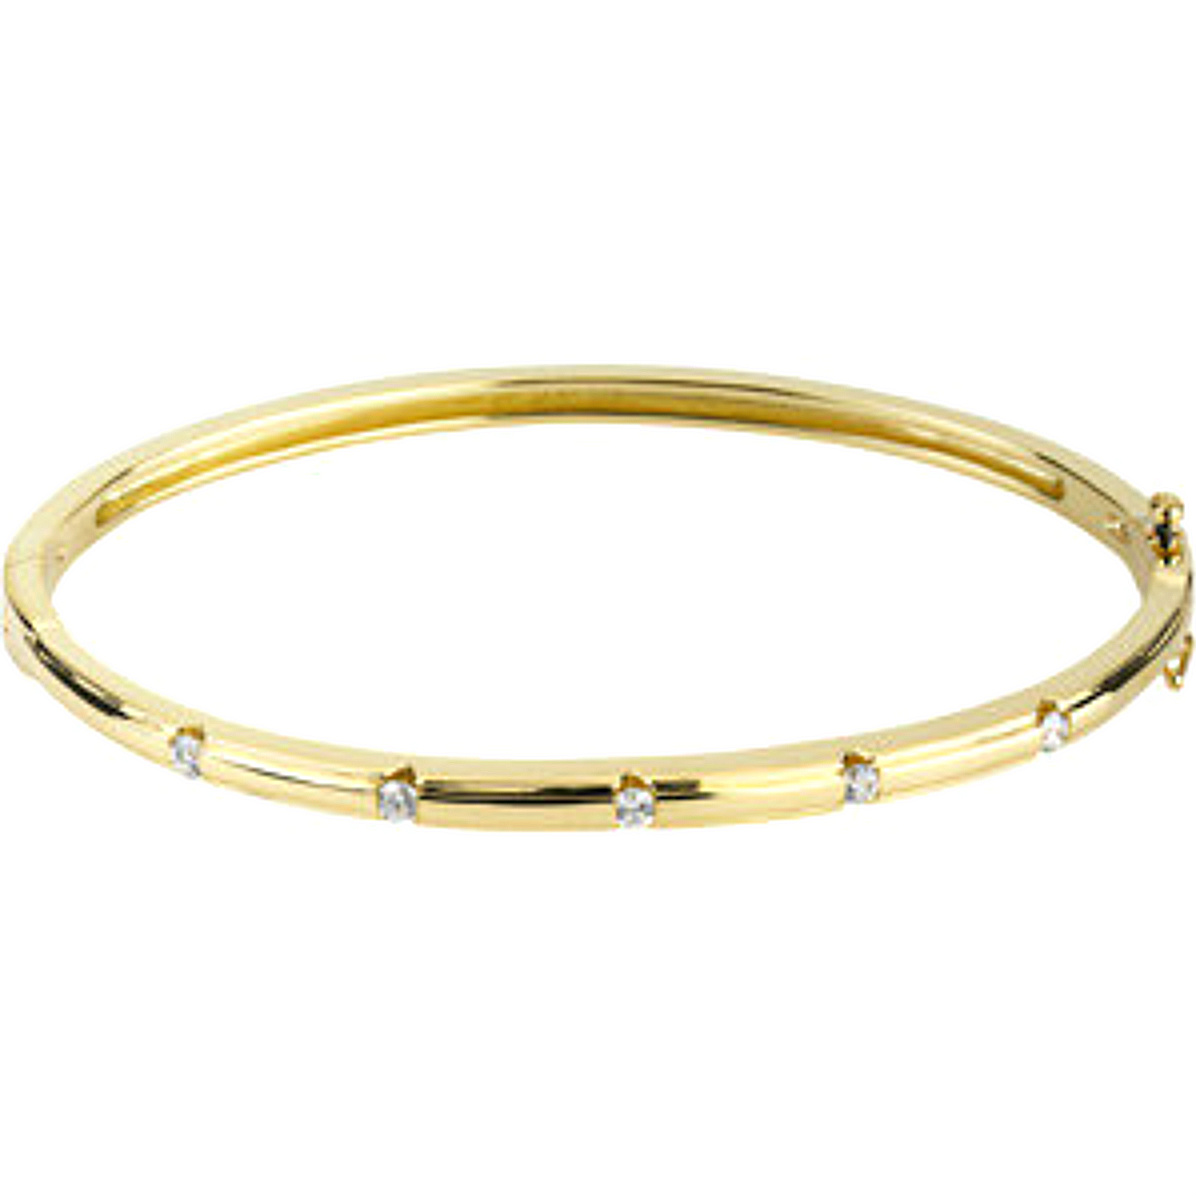 Petite 1/4 CTW Diamond Bangle Bracelet, 14k Yellow Gold, 6"